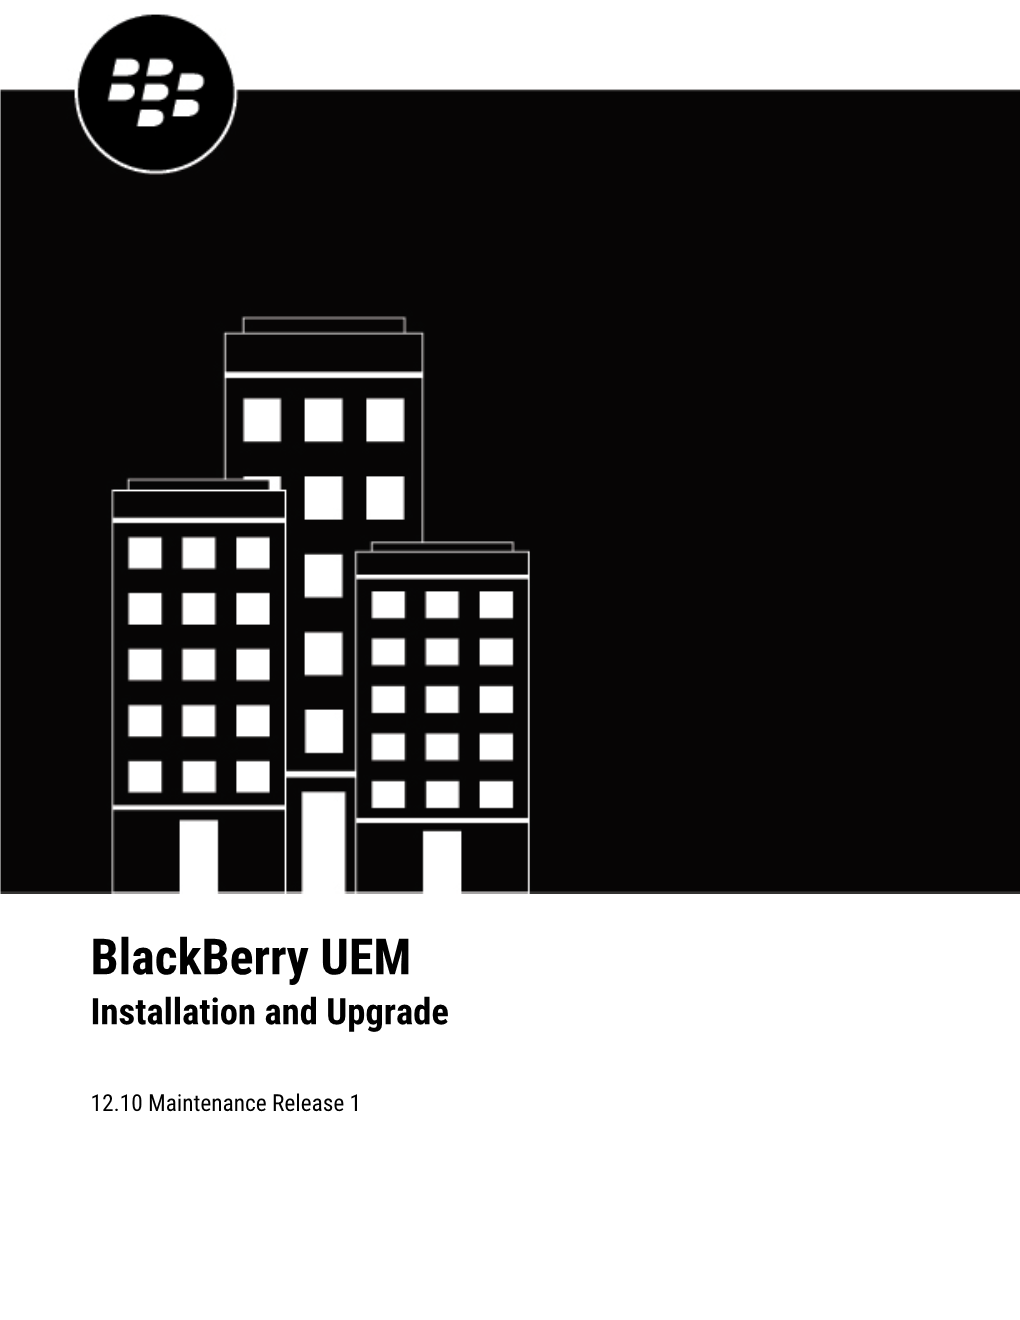 Blackberry UEM Installation and Upgrade